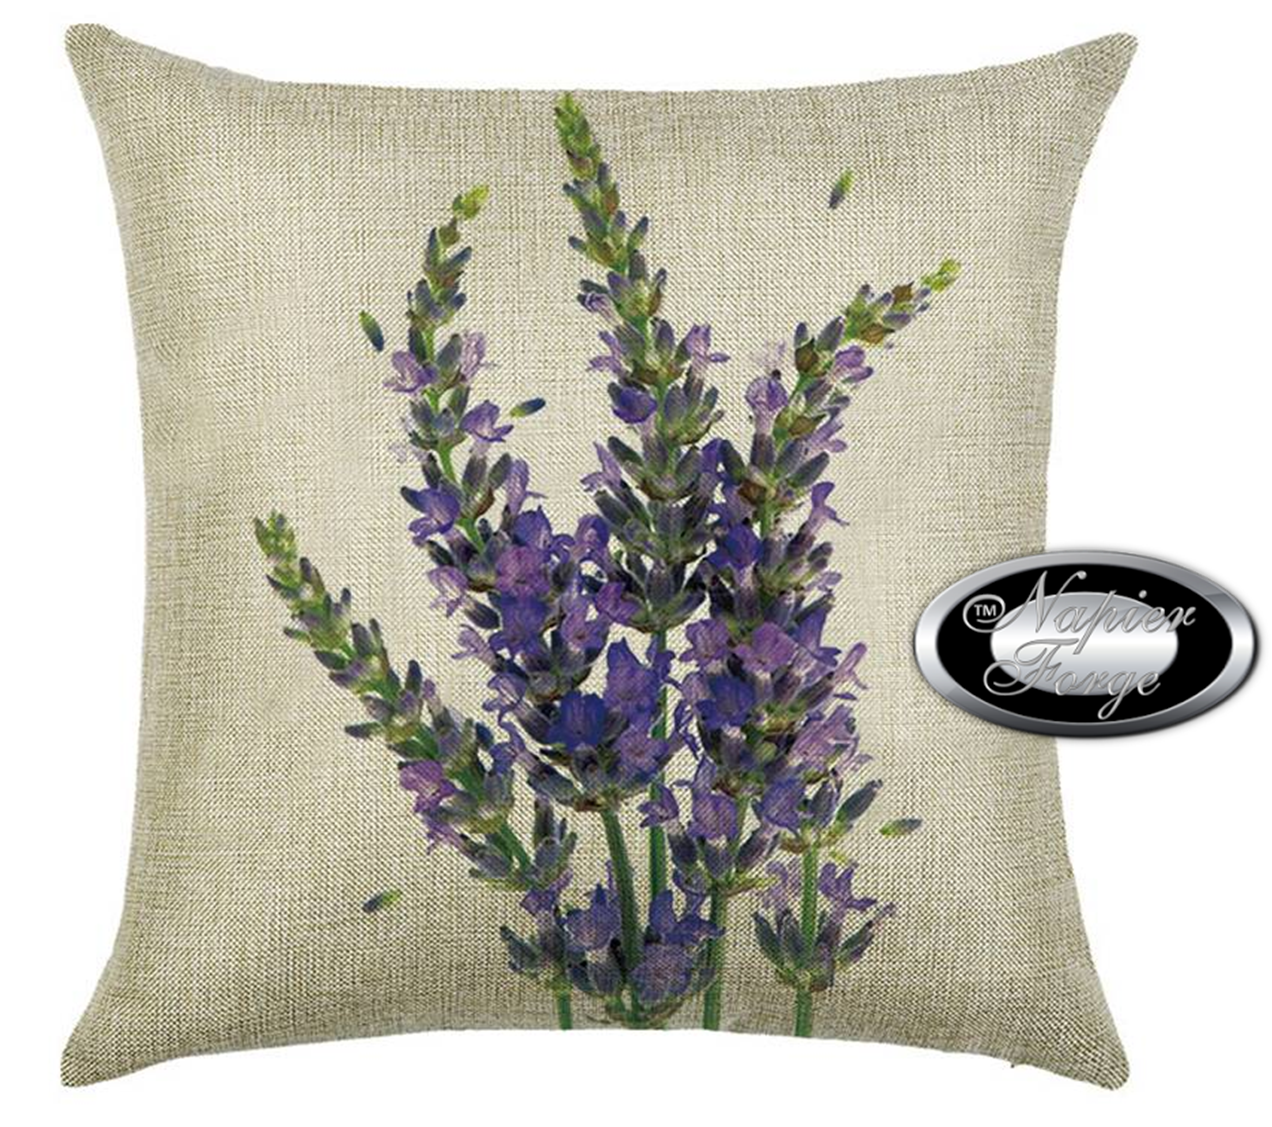 Farmhouse Cotton Linen Blend Cushion Cover 45cm x 45cm - Design Classic Lavender *Free Shipping